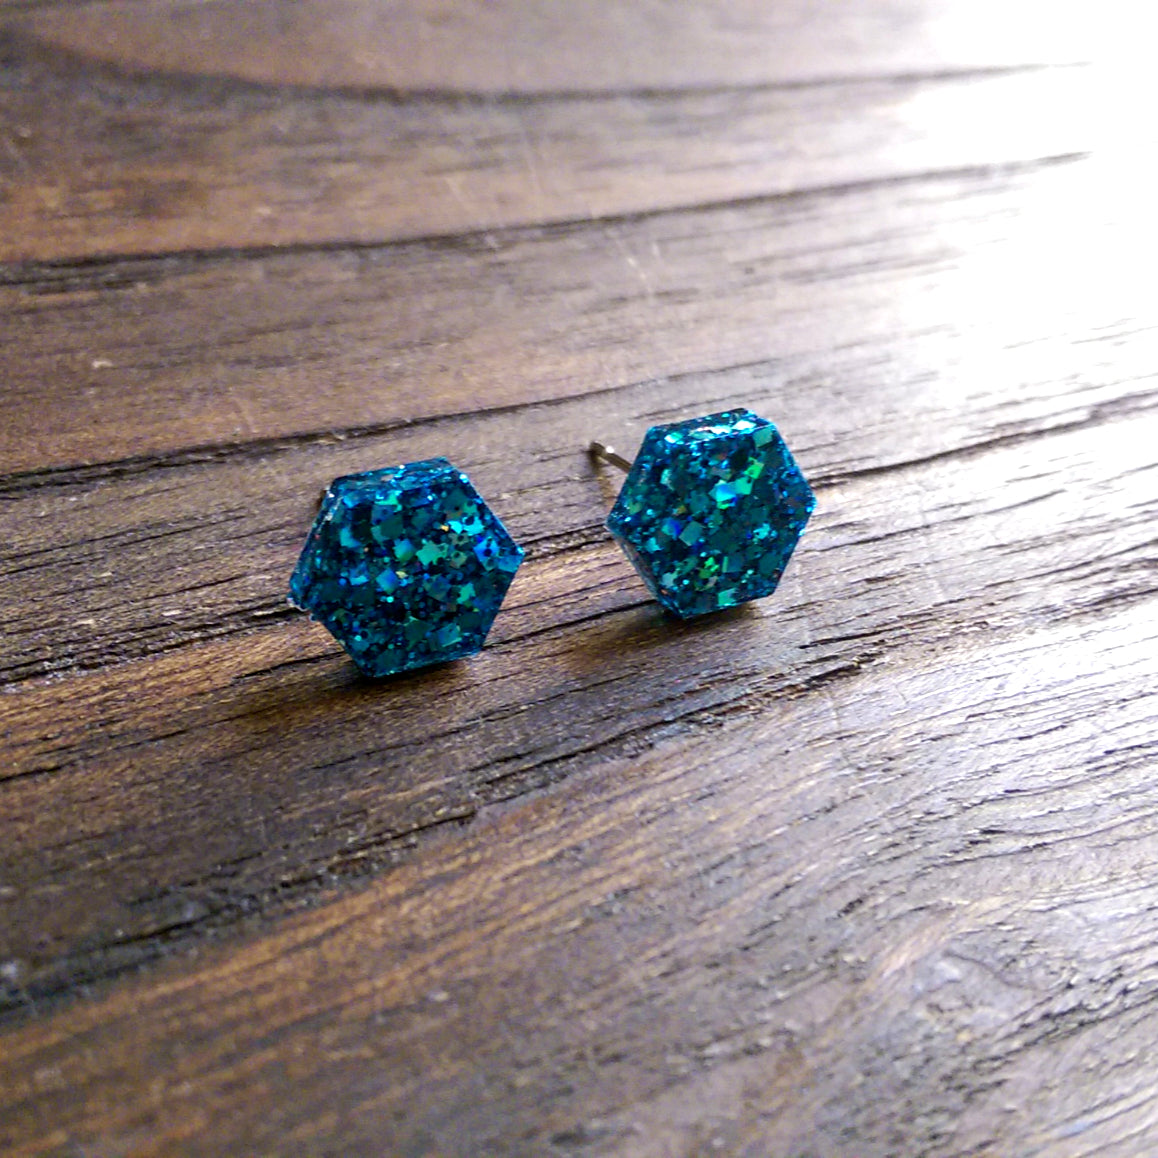 Hexagon Resin Stud Earrings, Blue Sparkle Earrings. Stainless Steel Stud Earrings. 10mm - Silver and Resin Designs